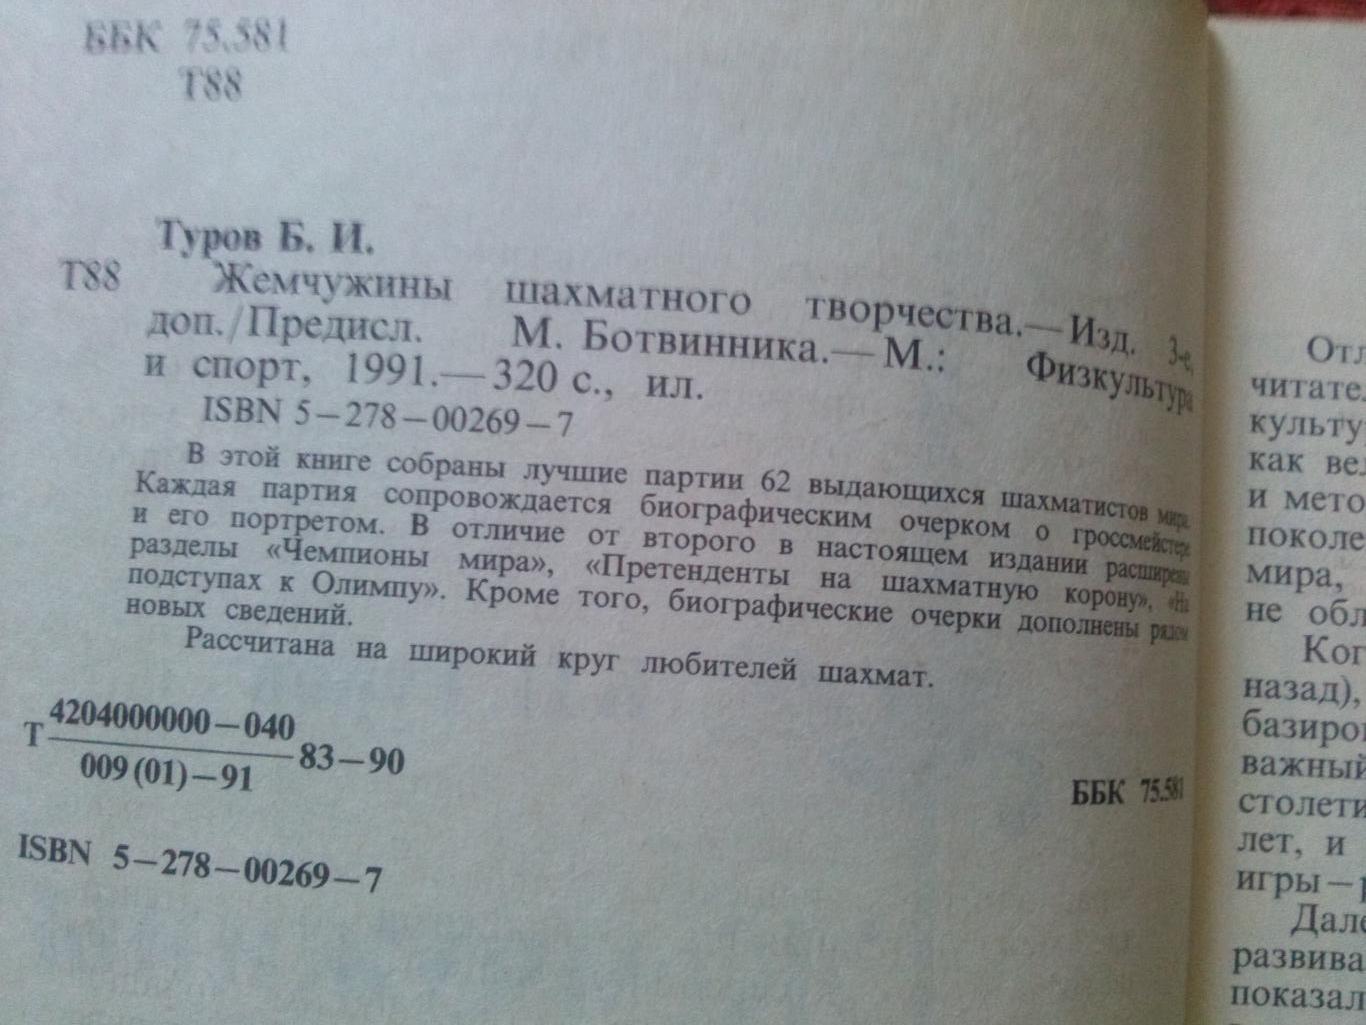 Б.И. Туров -Жемчужины шахматного творчества1991 г.ФиС(Шахматы) 3